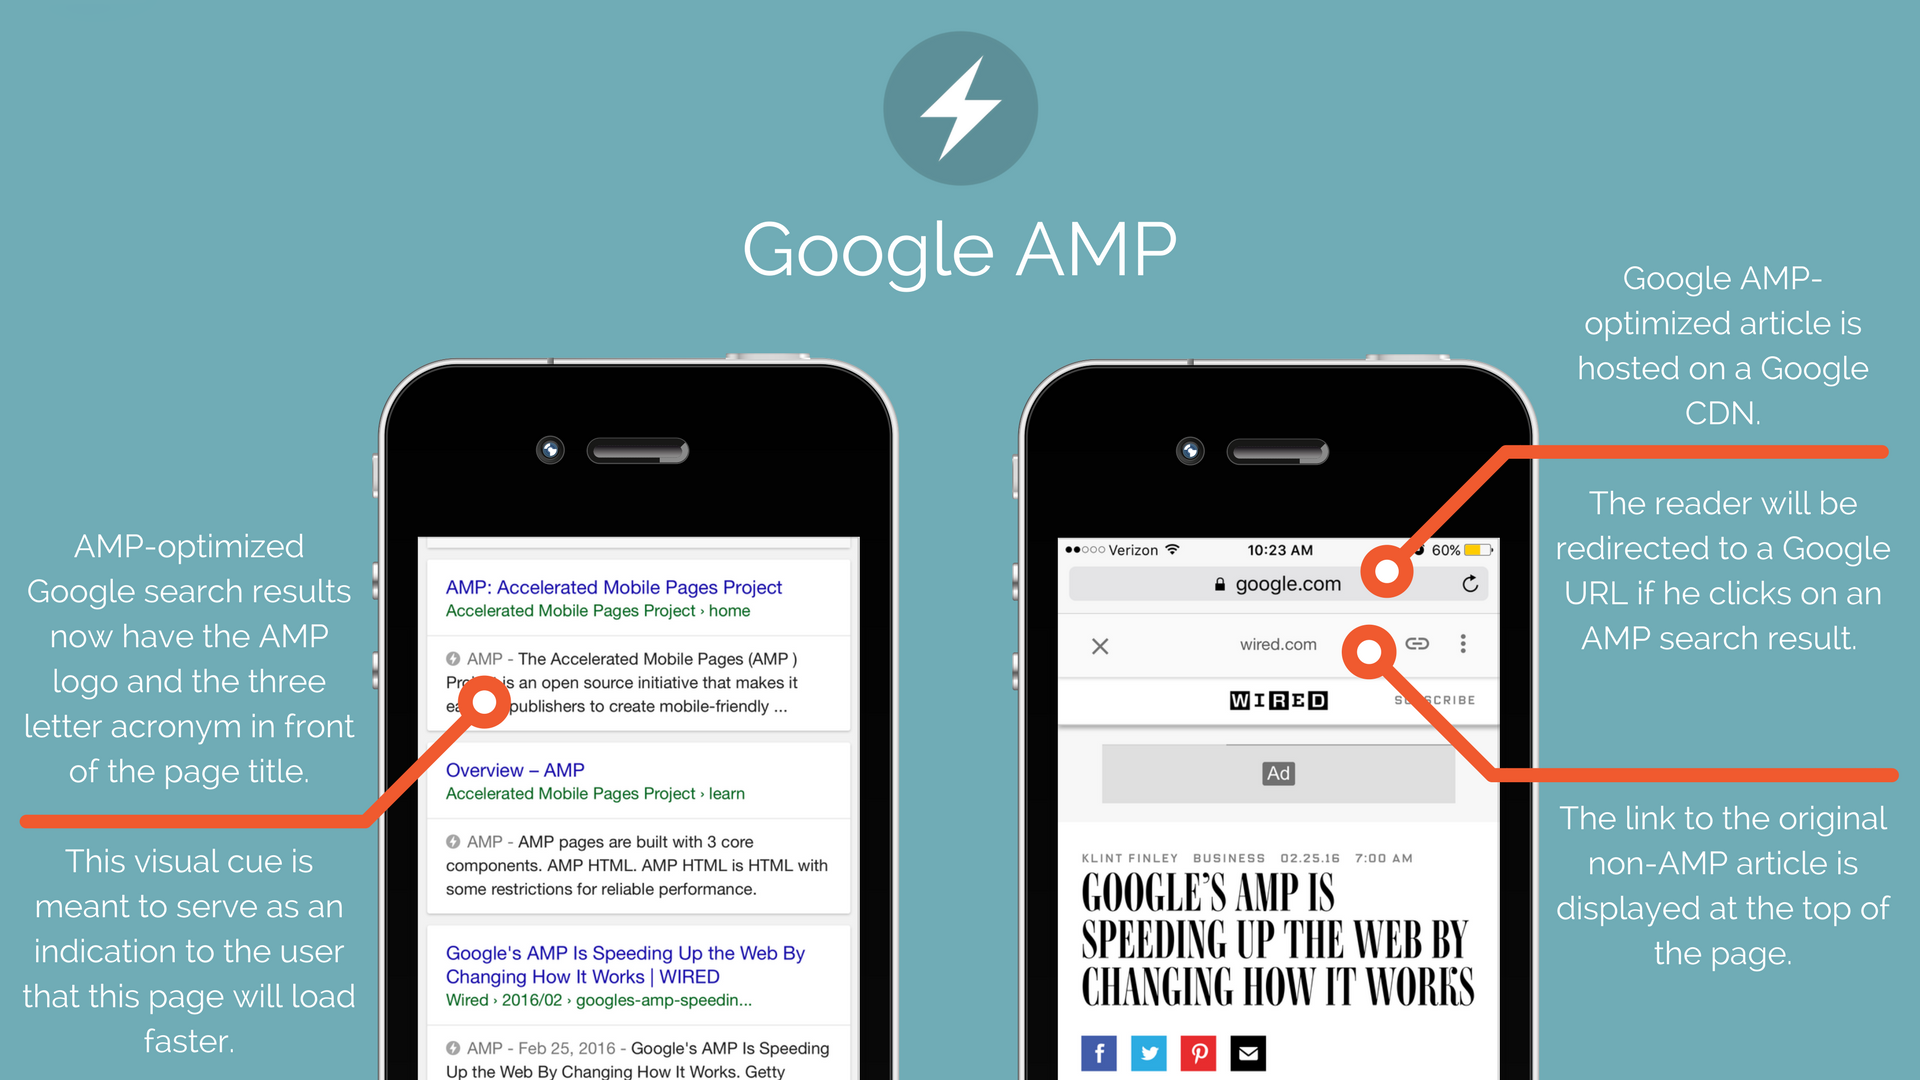 Google AMP pages factoids